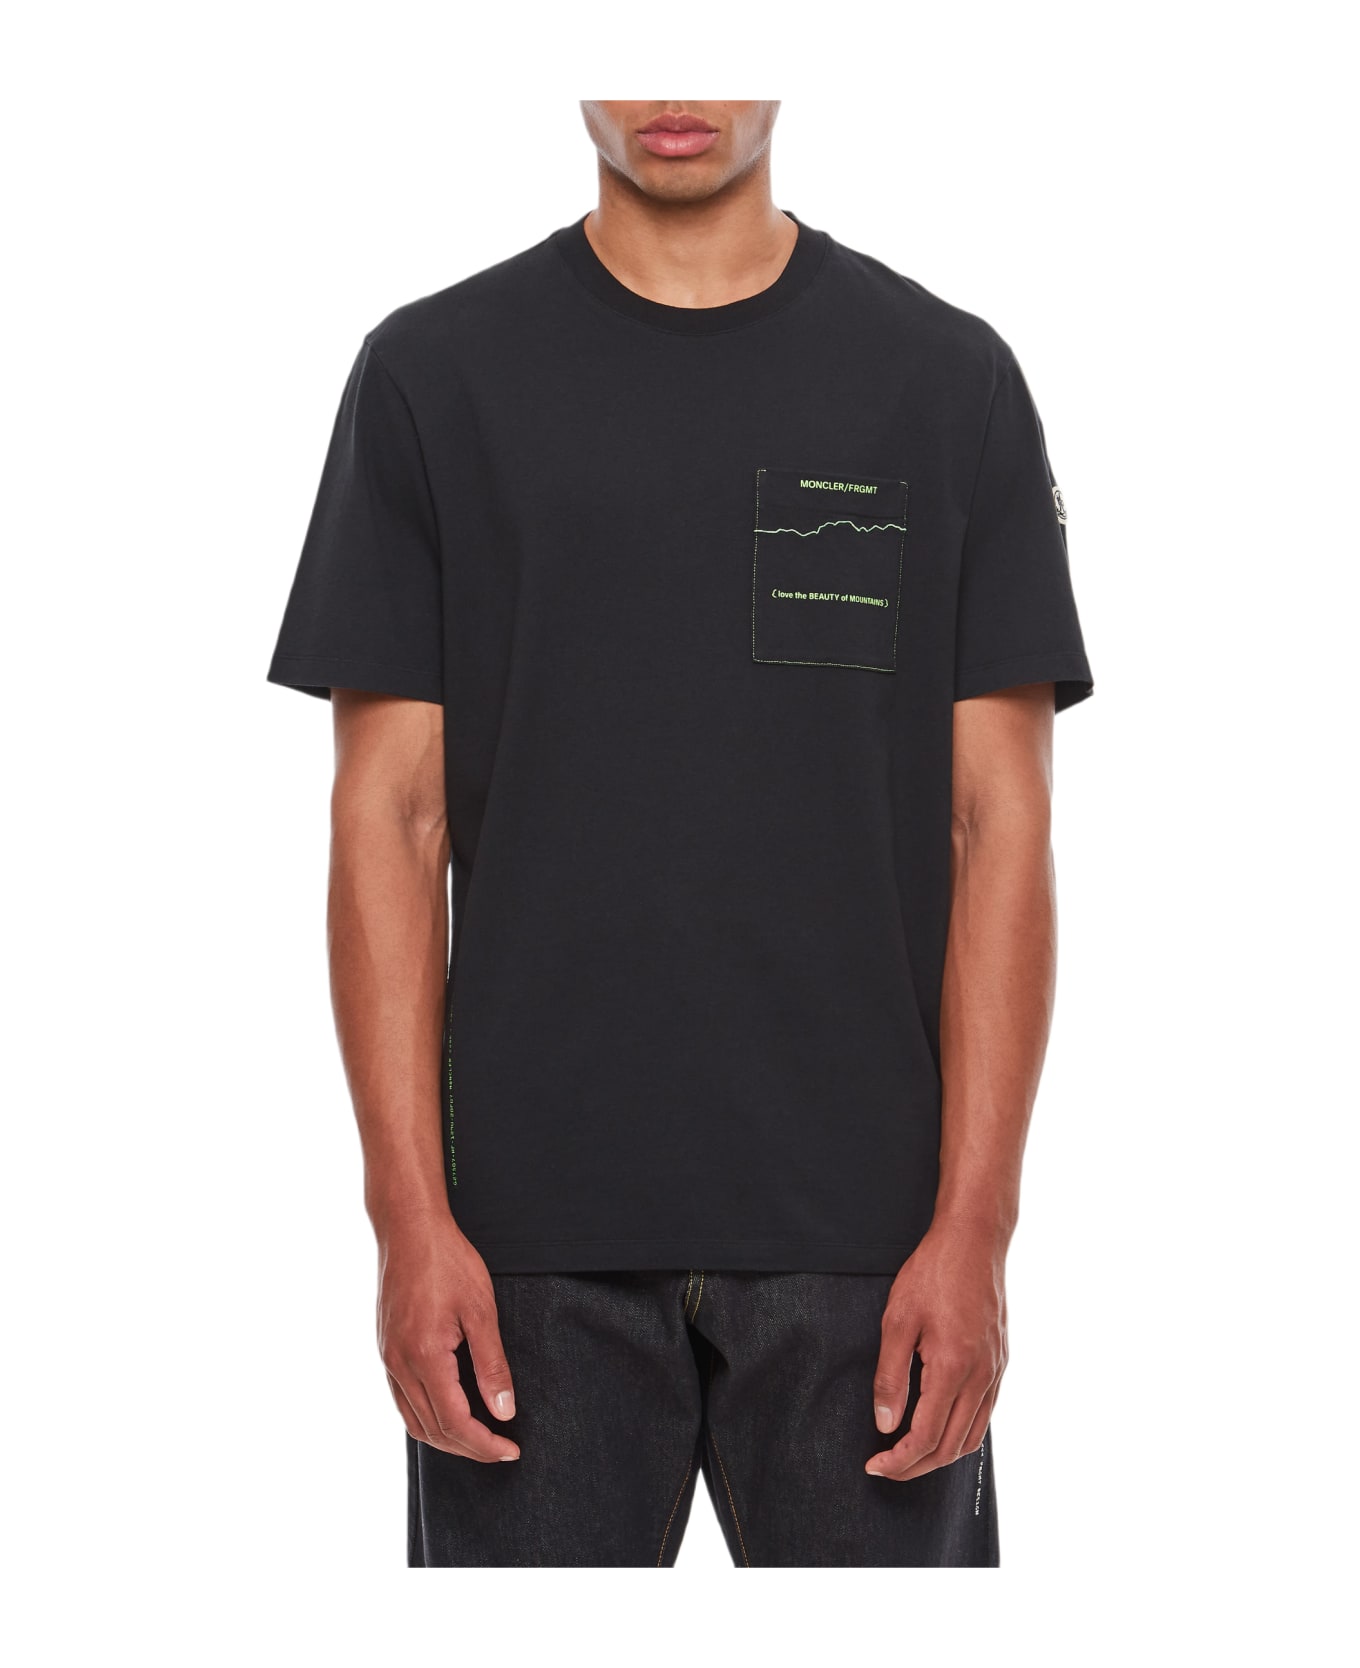 Moncler Genius Printed T-shirt Moncler X Frgmt - Black